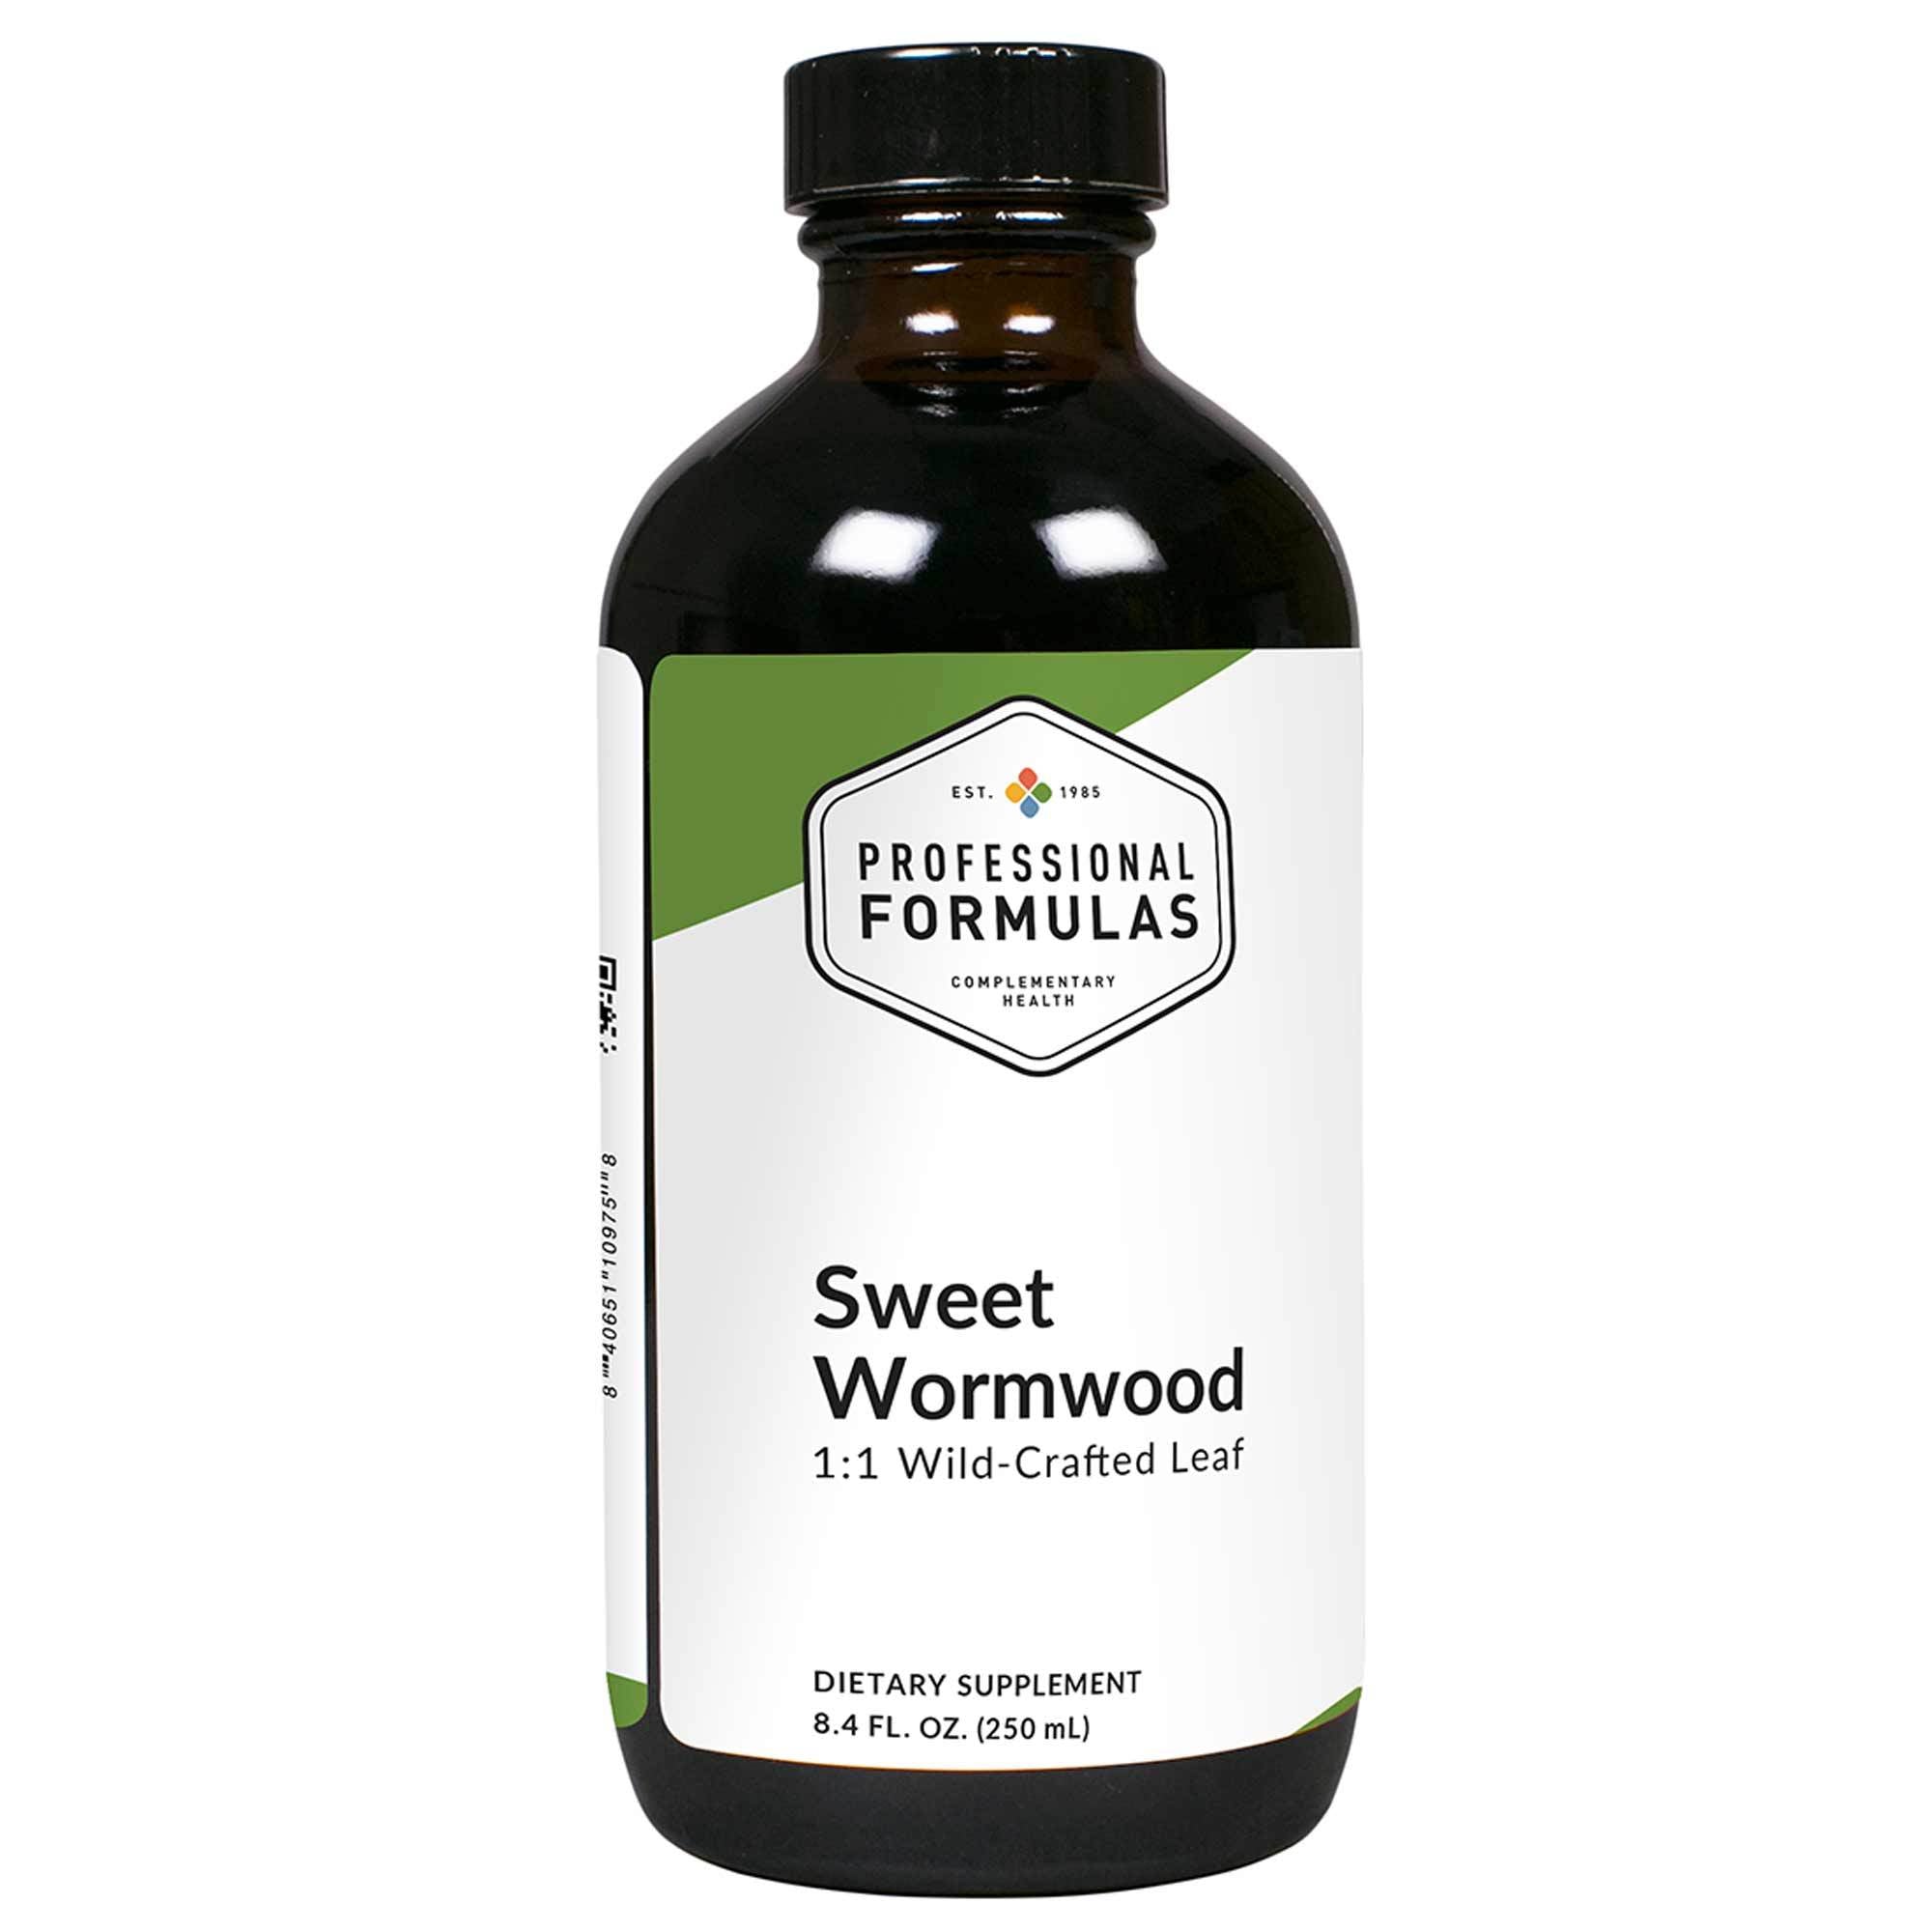 Professional Formulas - Sweet Wormwood (Artemisia annua) - 8.4 FL. OZ. (250 mL)